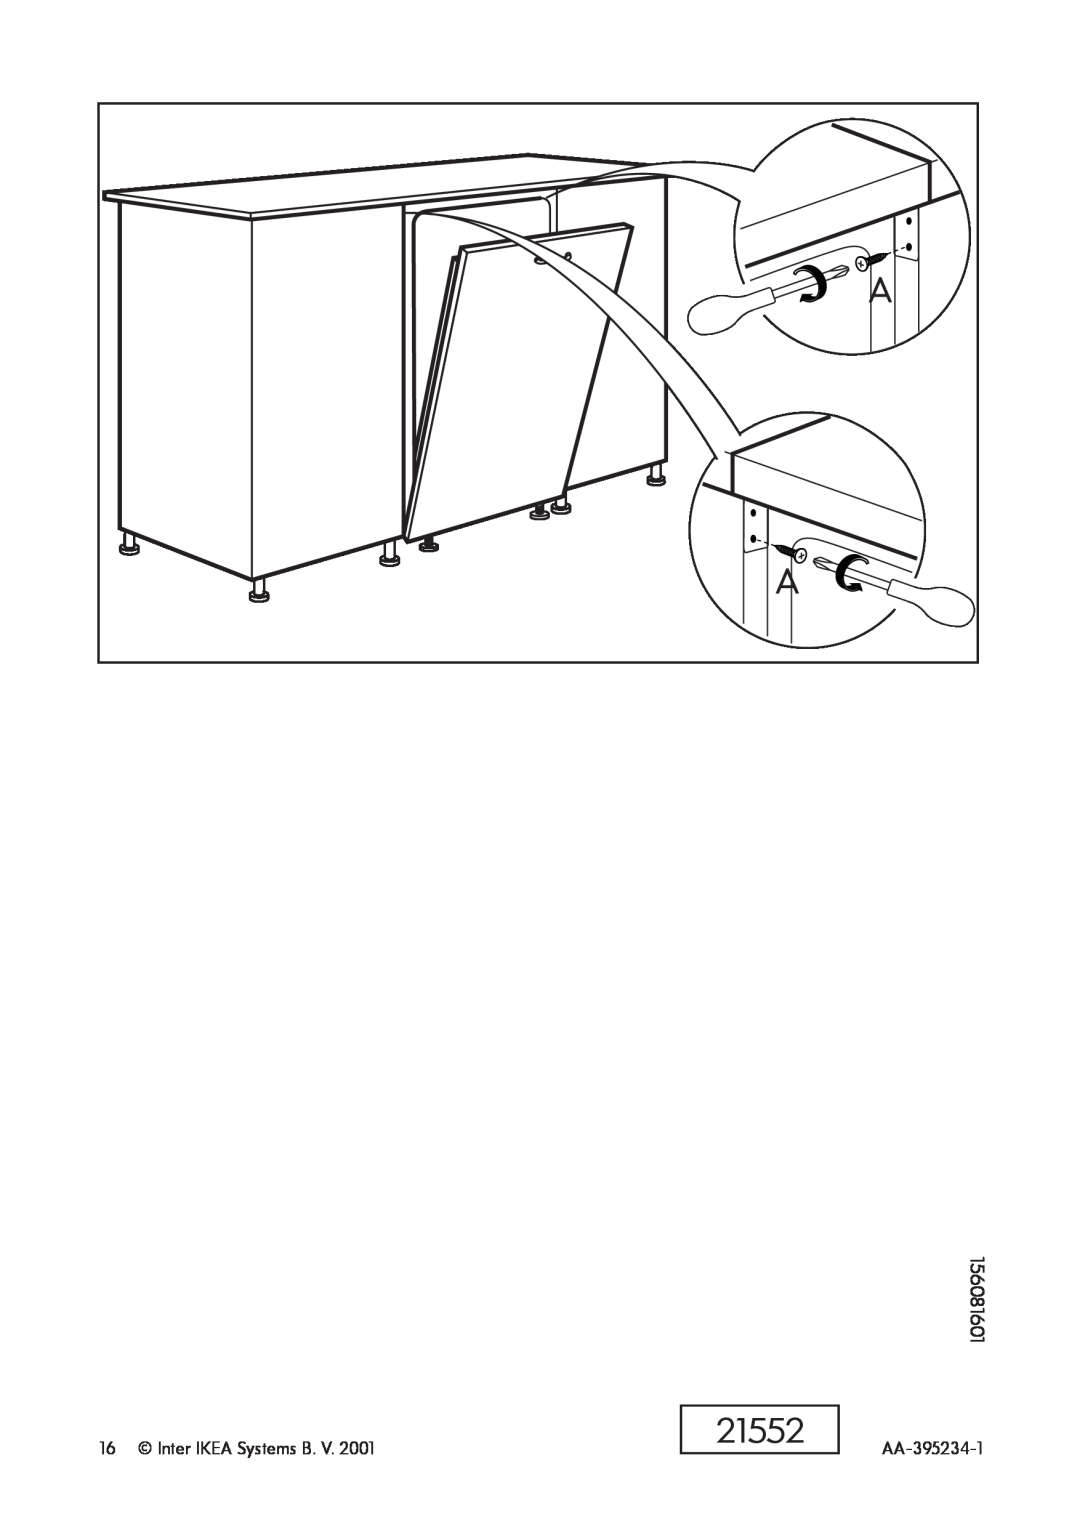 IKEA DW60 manual 21552, 1560, Inter IKEA Systems B. V, AA-395234-1 